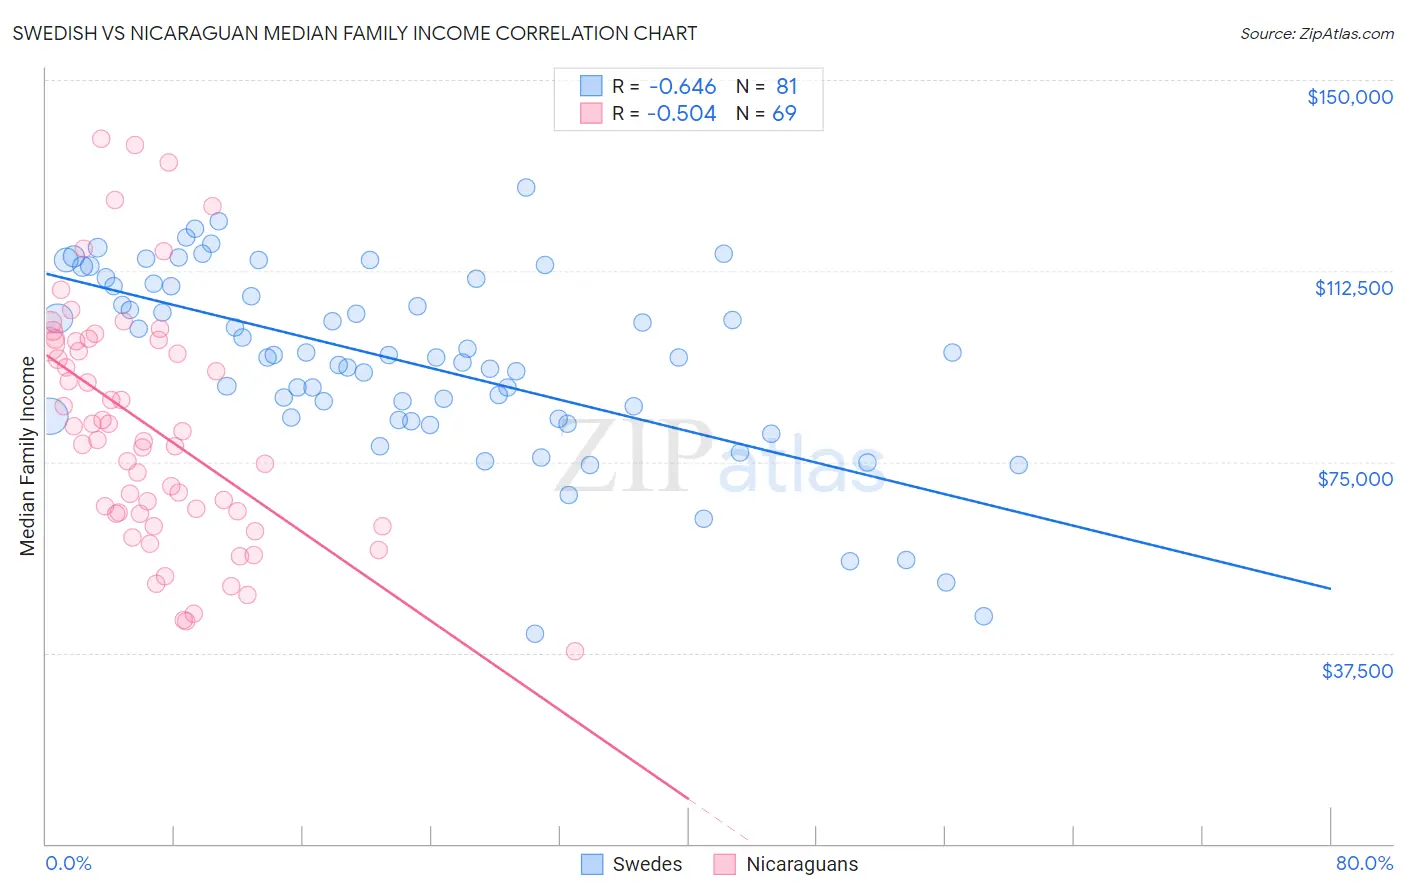 Swedish vs Nicaraguan Median Family Income